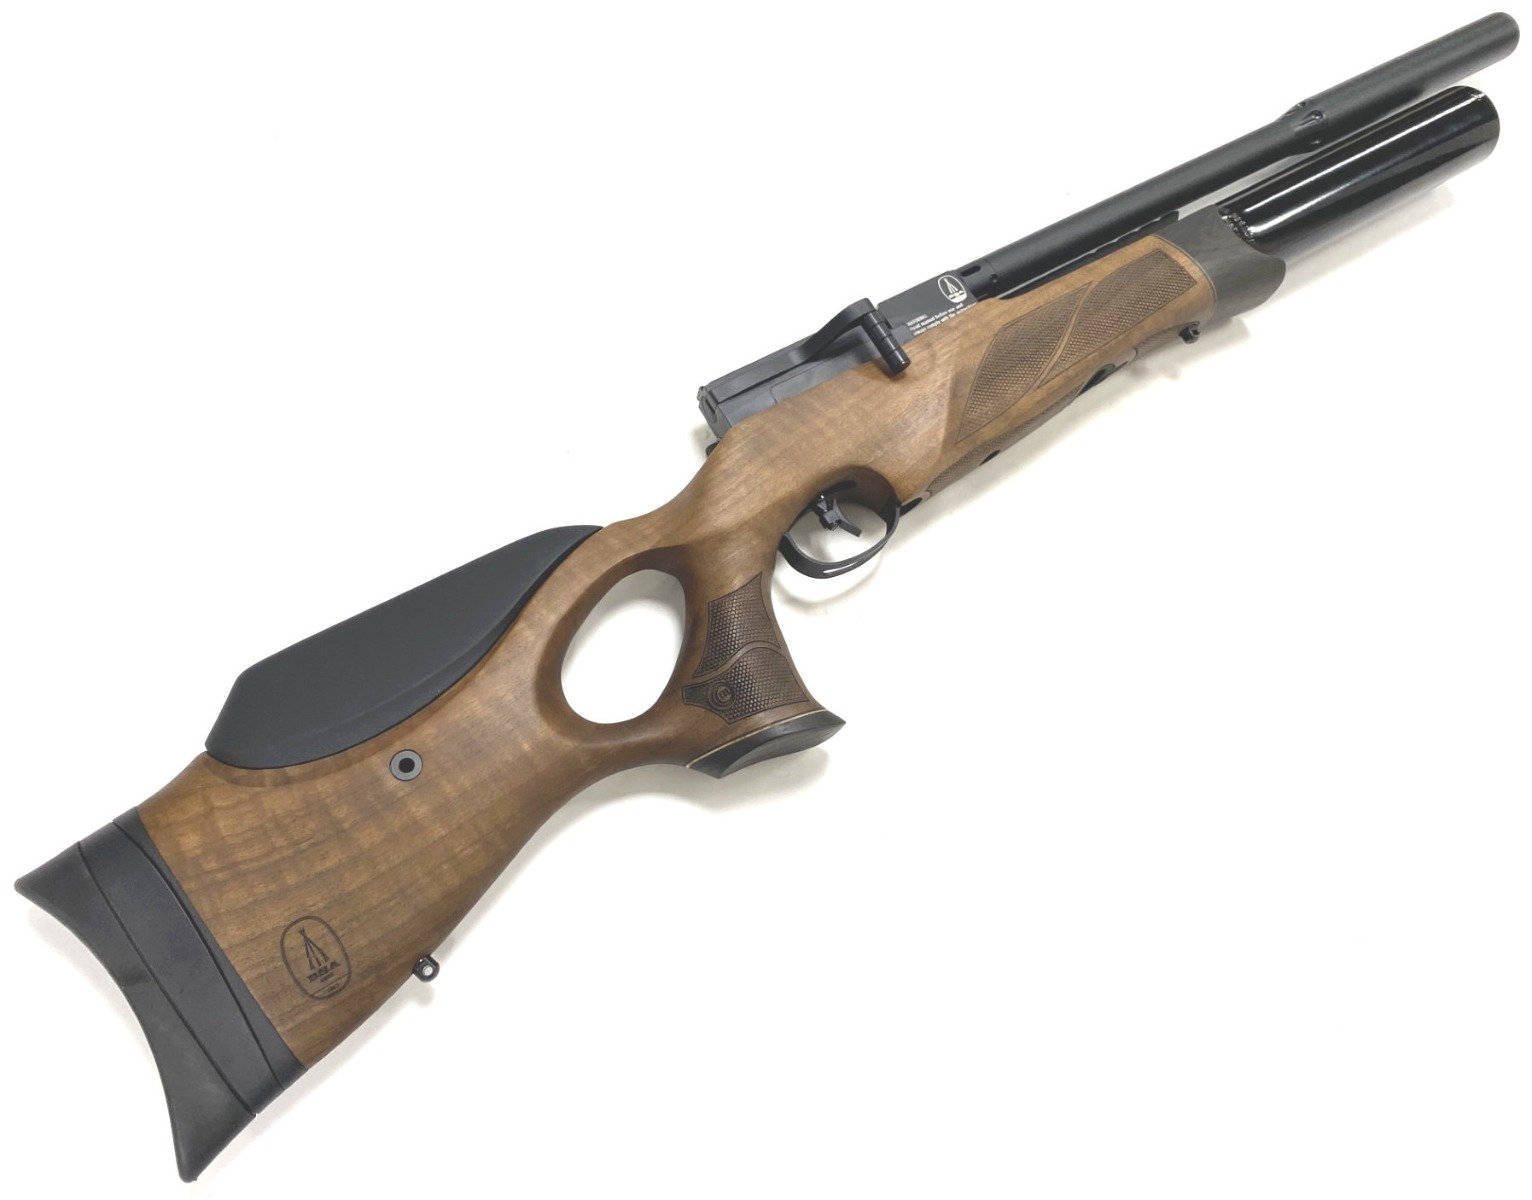 BSA R12 CLX Pro Walnut Super Carbine .177 Air Rifle - 230718/001 Image 1